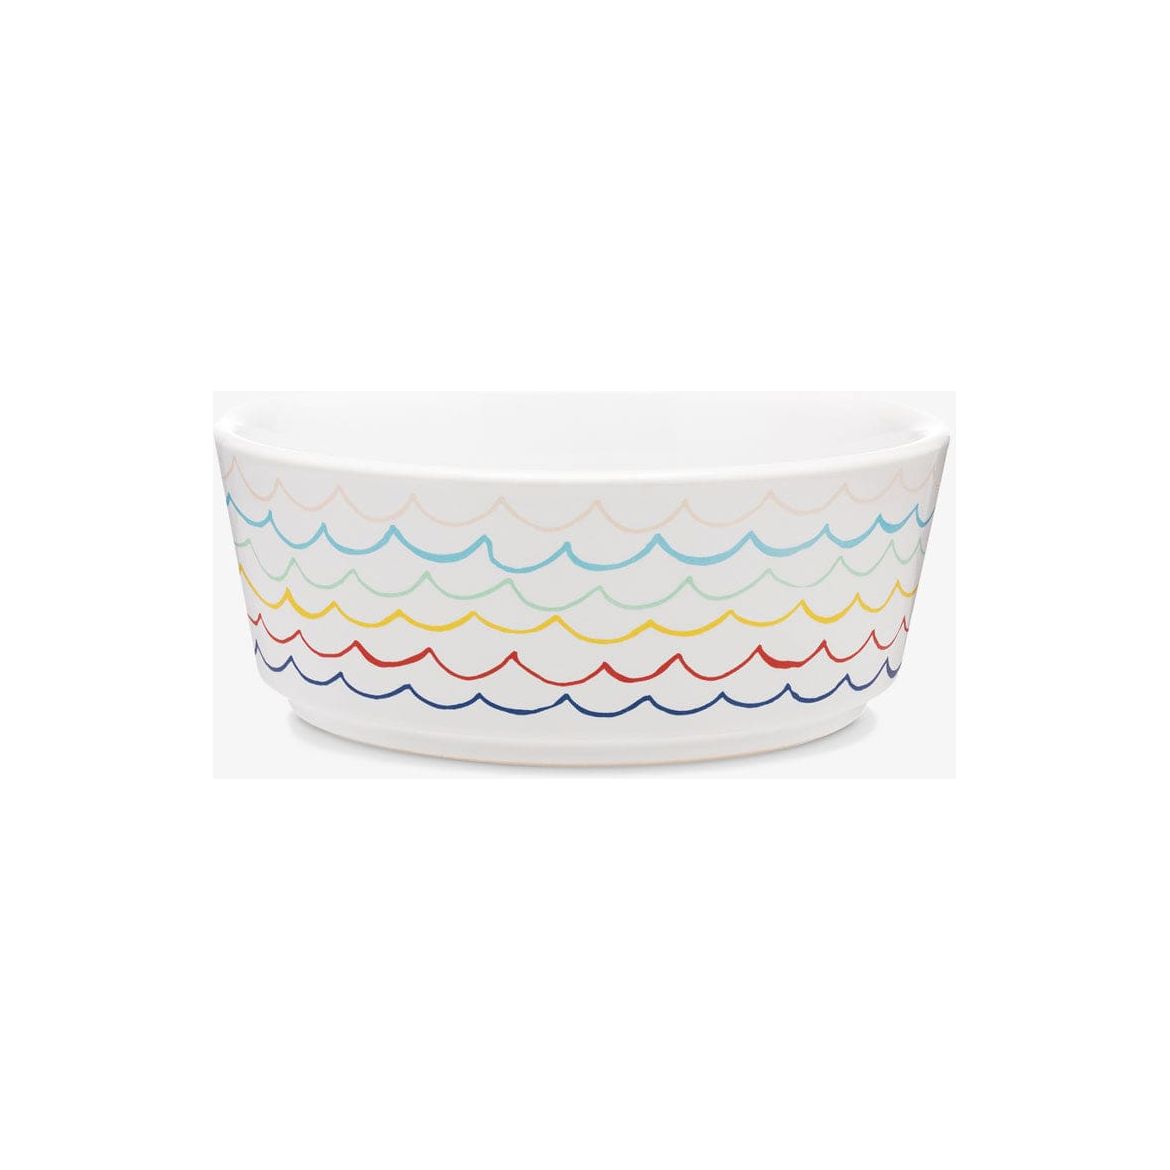 Waggo Multi Wave / S Sketched Wave Ceramic Dog Bowl by Waggo